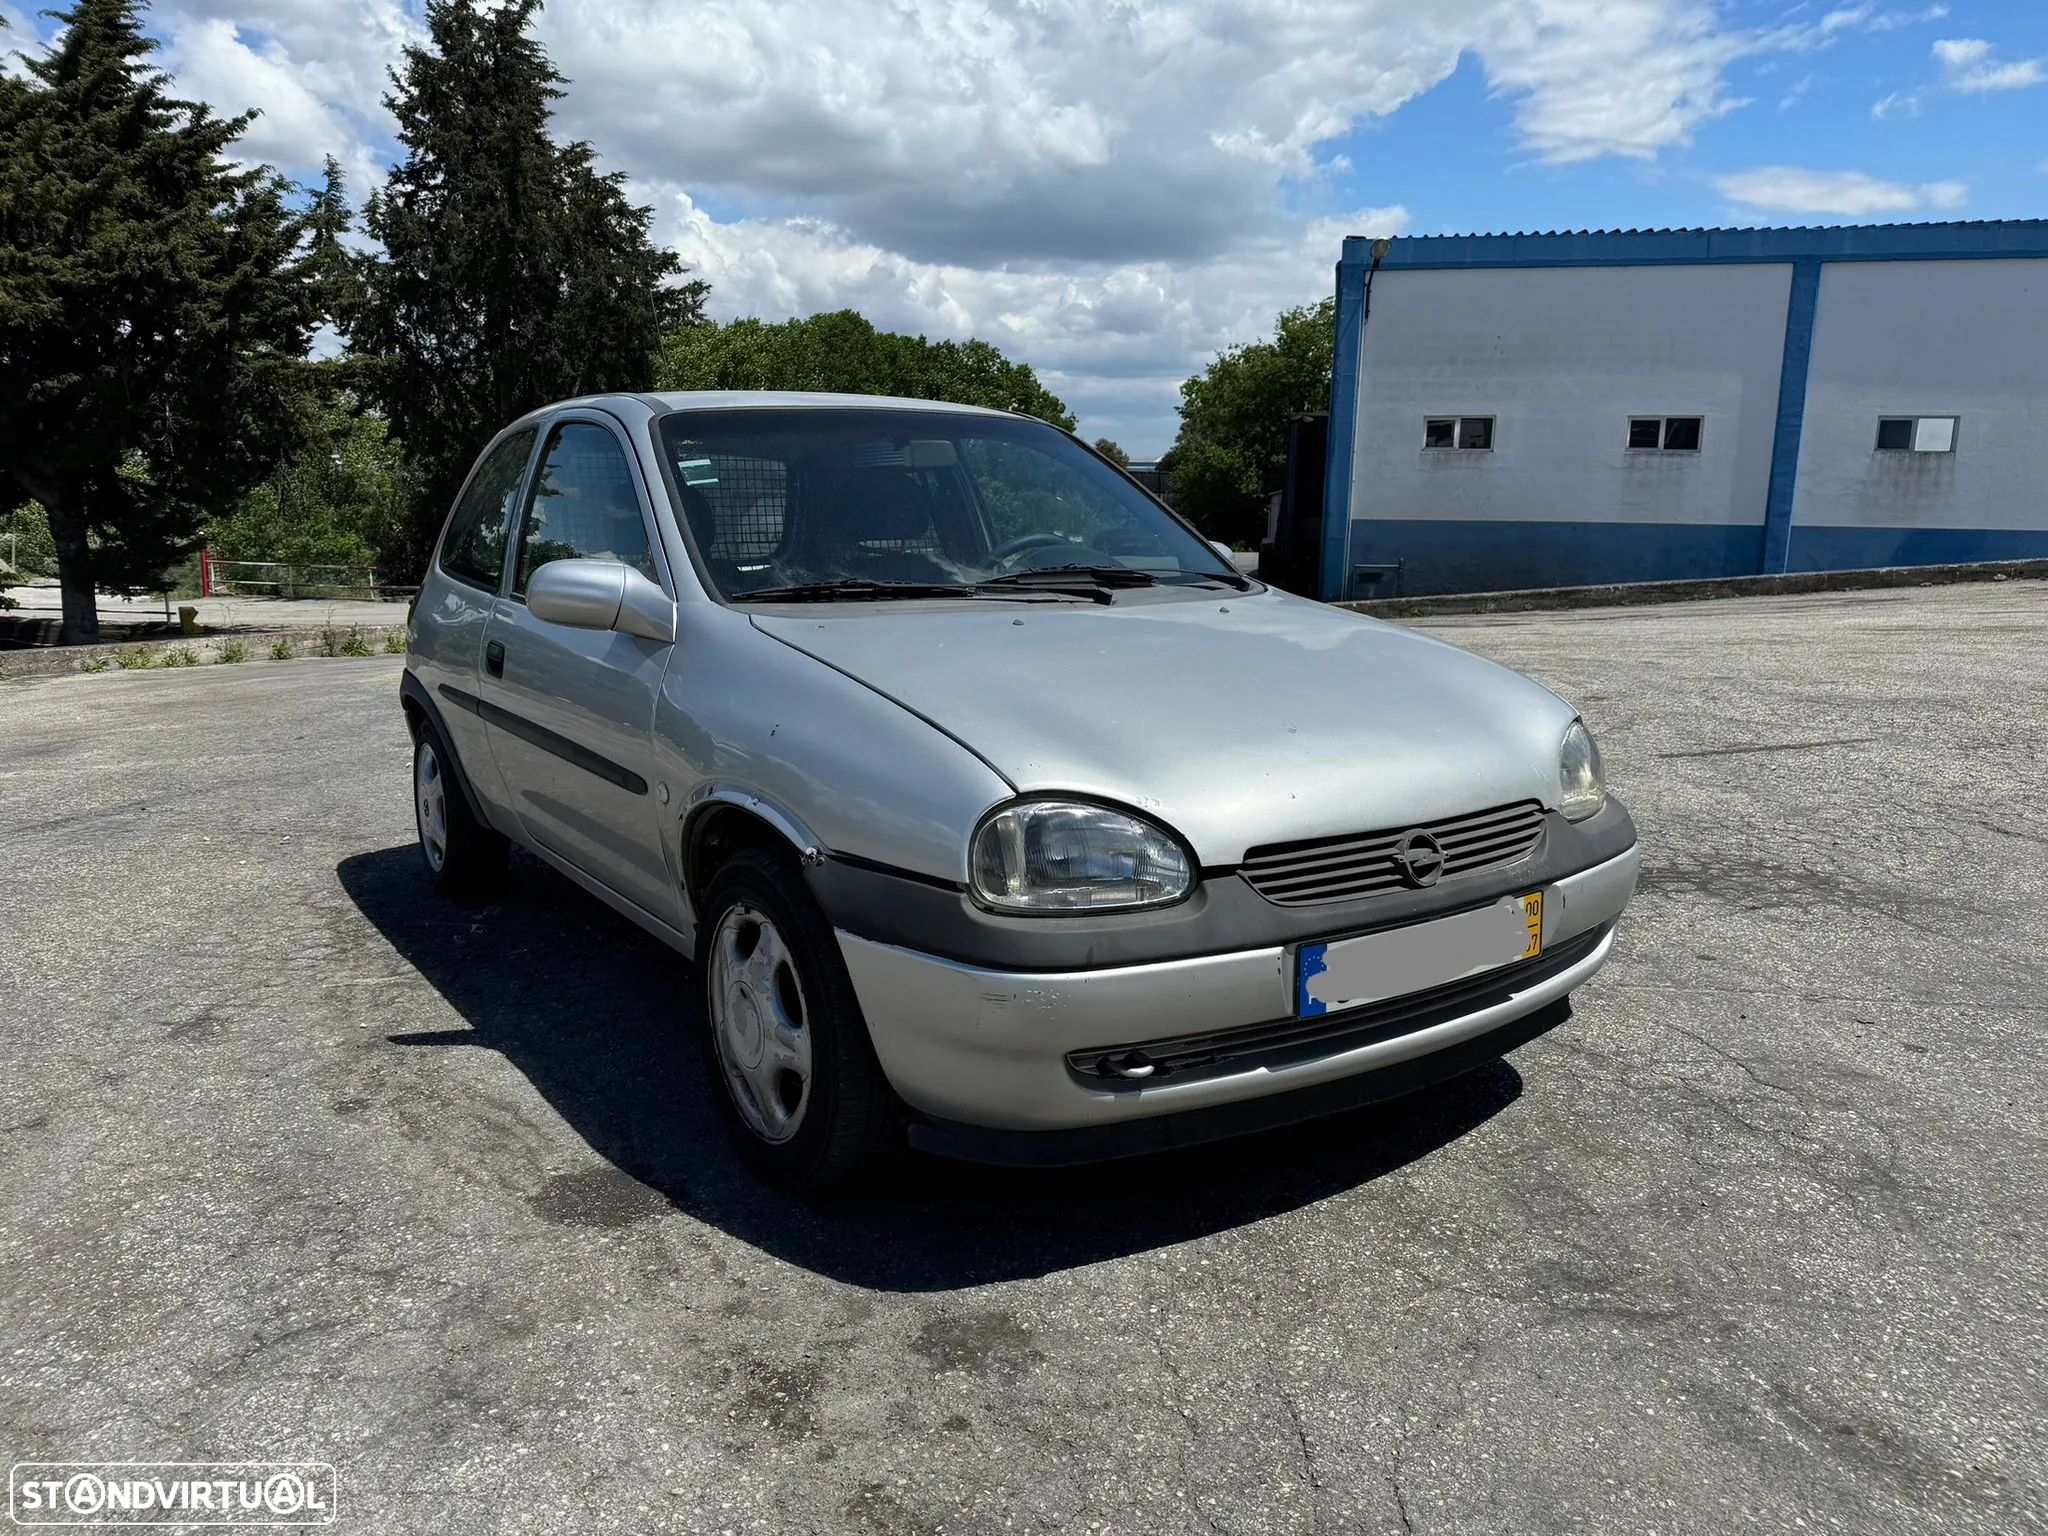 Opel corsa b 1.5 Td de 2000 para peças - 1